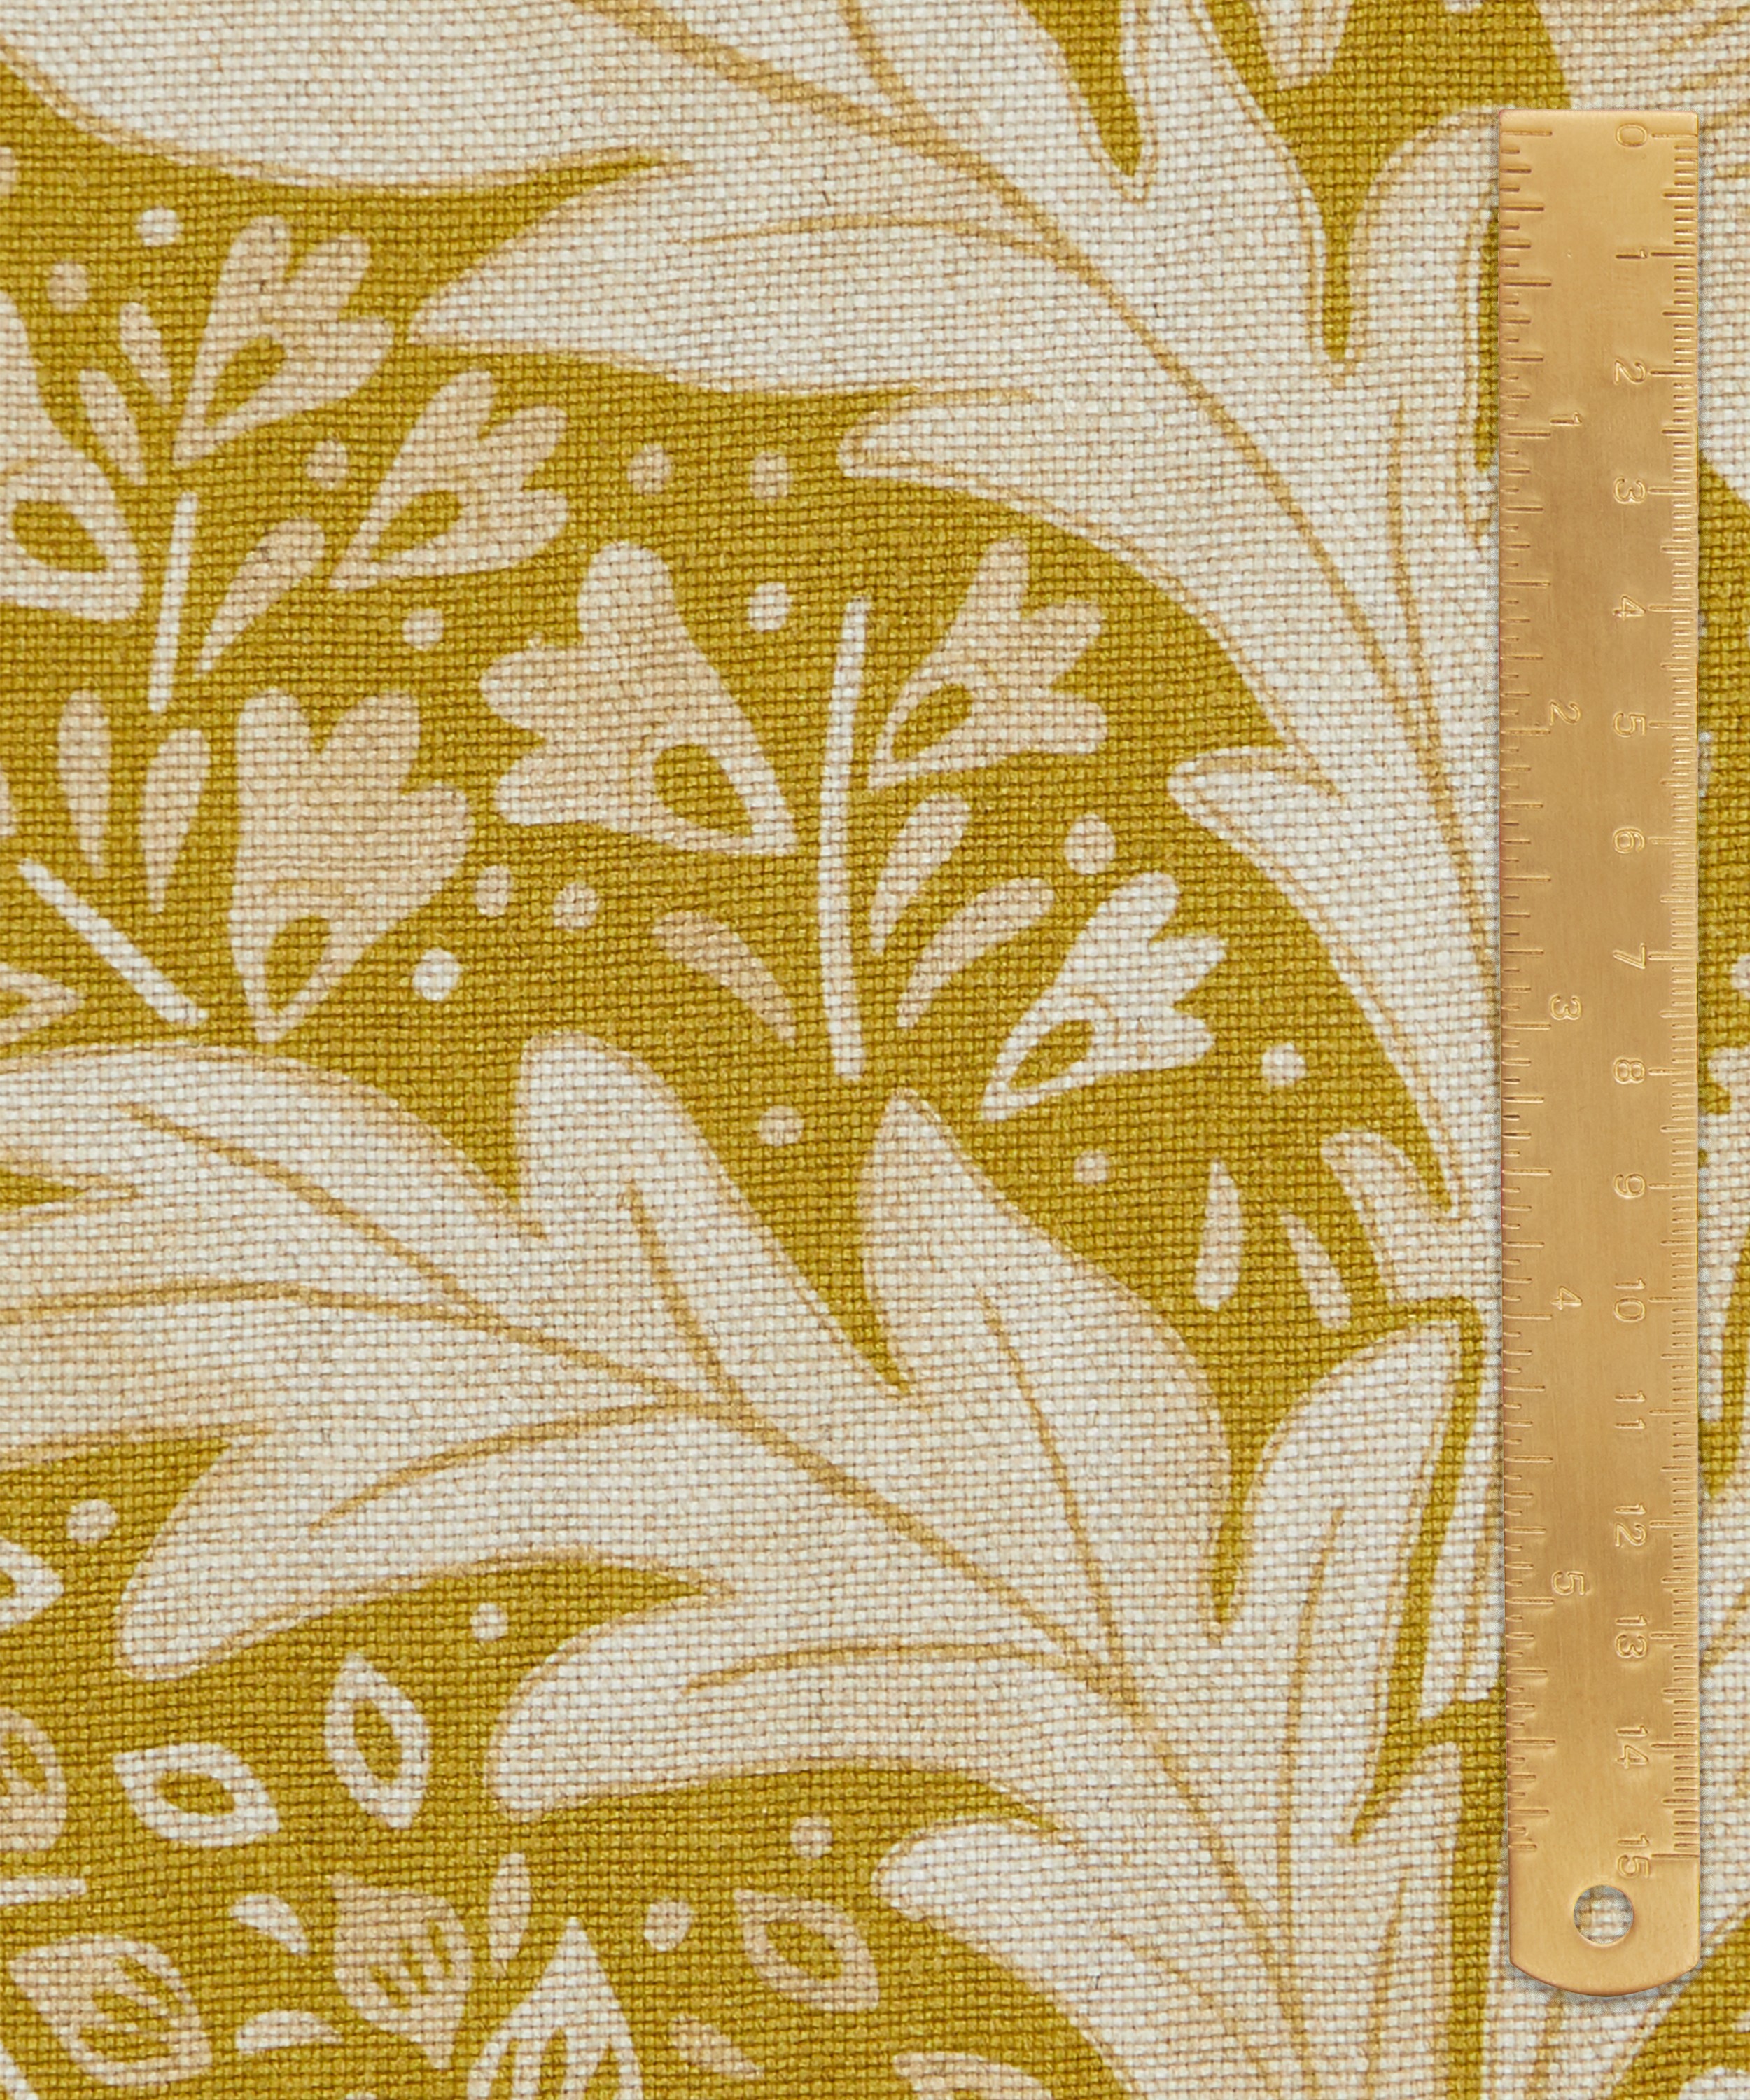 Liberty Interiors - Tudor Poppy Wycombe Linen in Yarrow image number 5